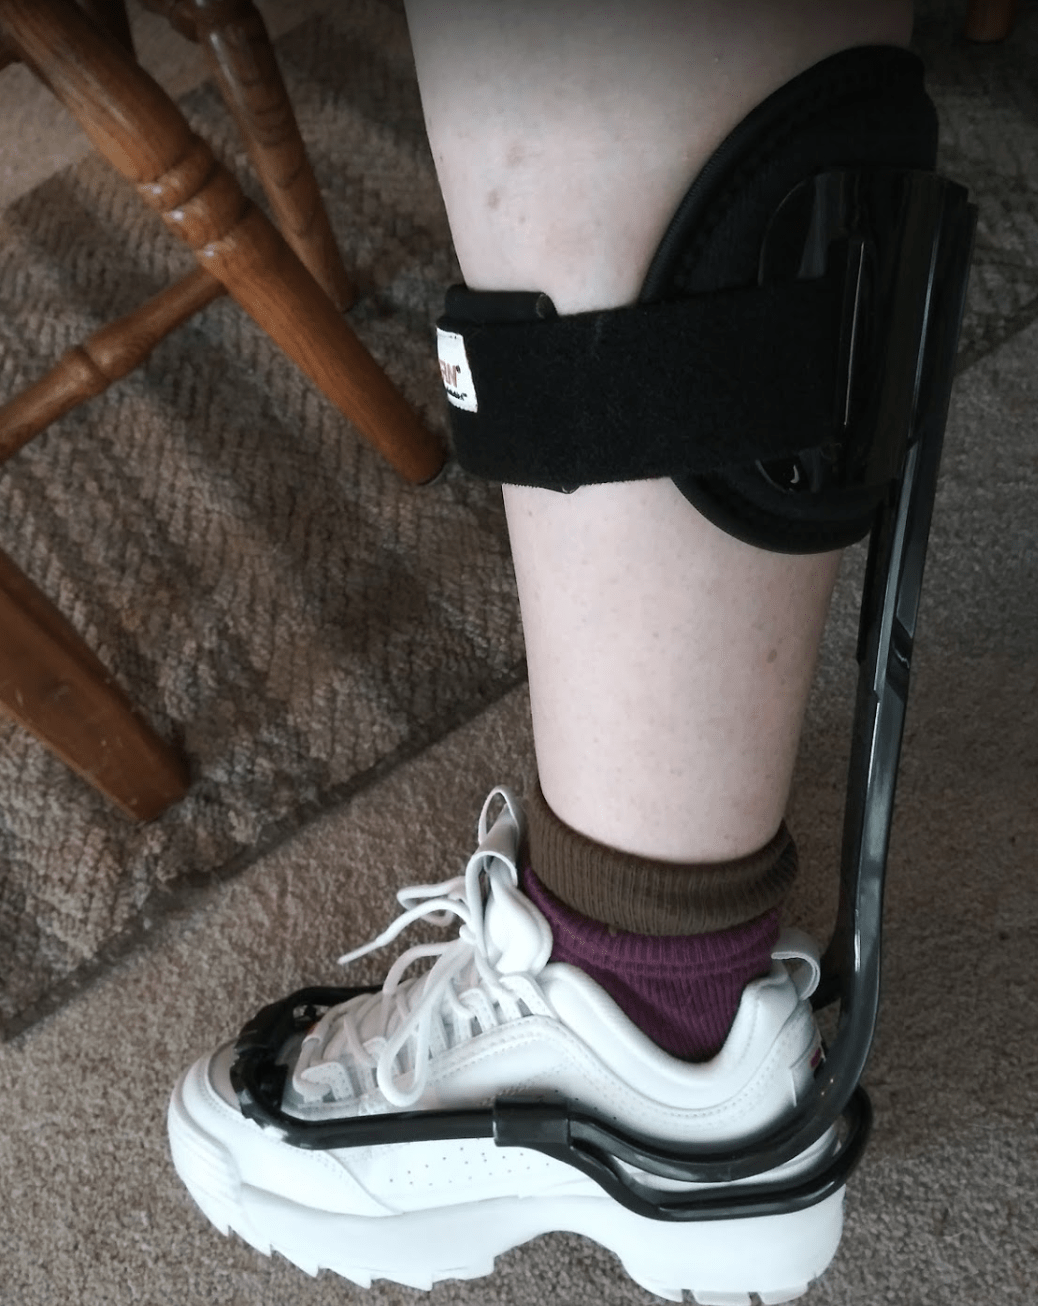 Woman's leg wearing a TurboMed AFO